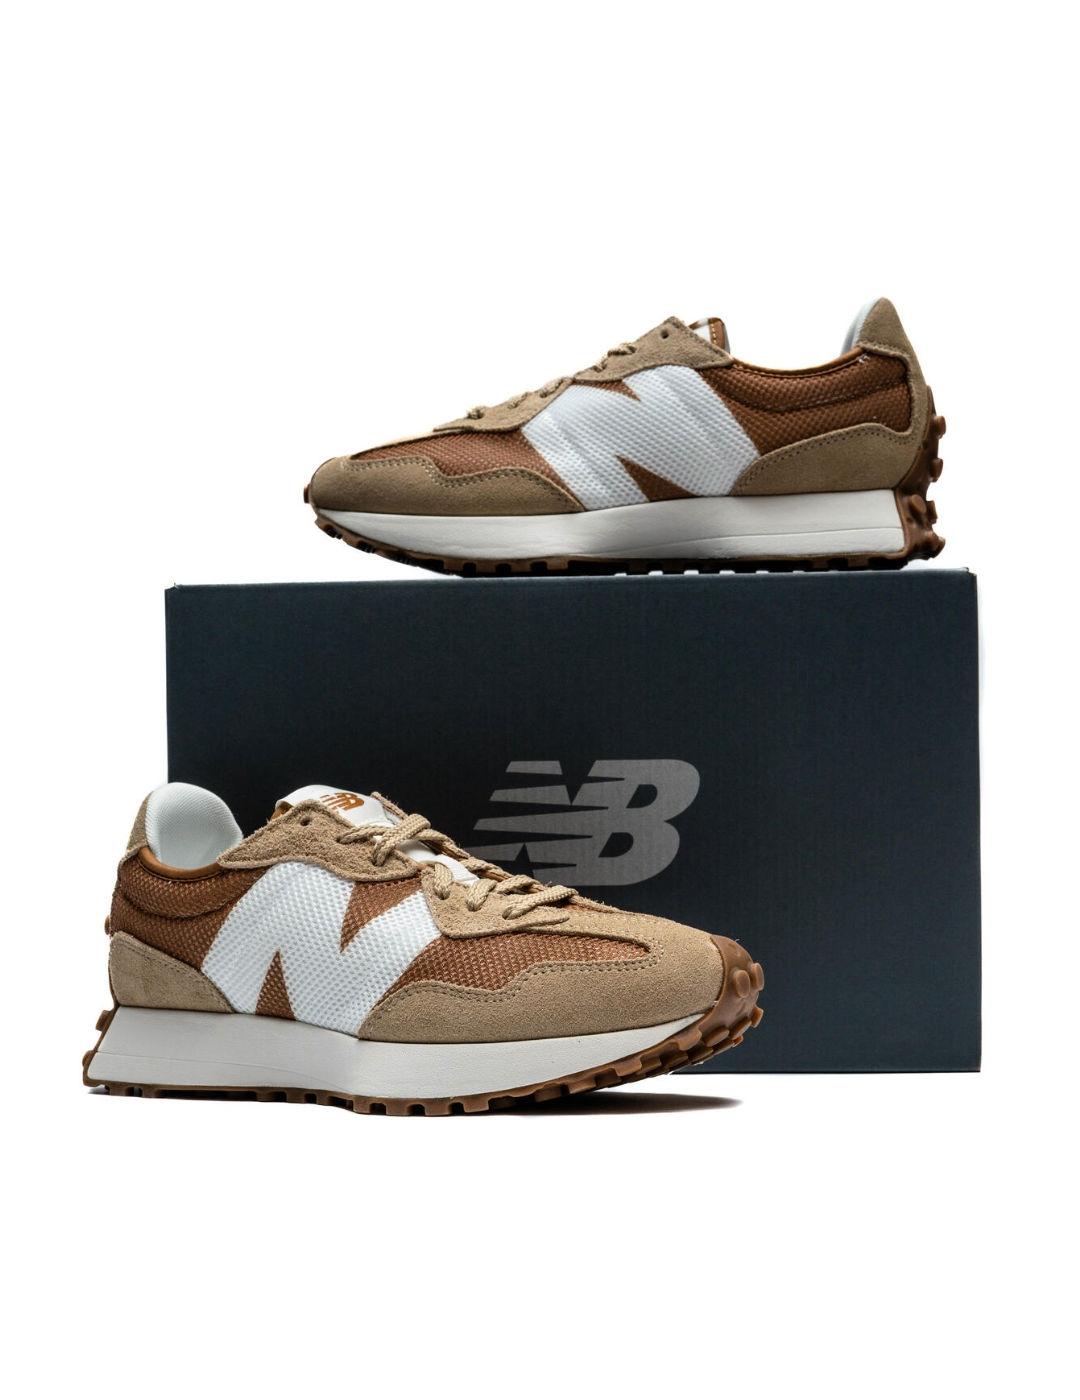 Zapatillas New Balance 327 marrón/blanco hombre